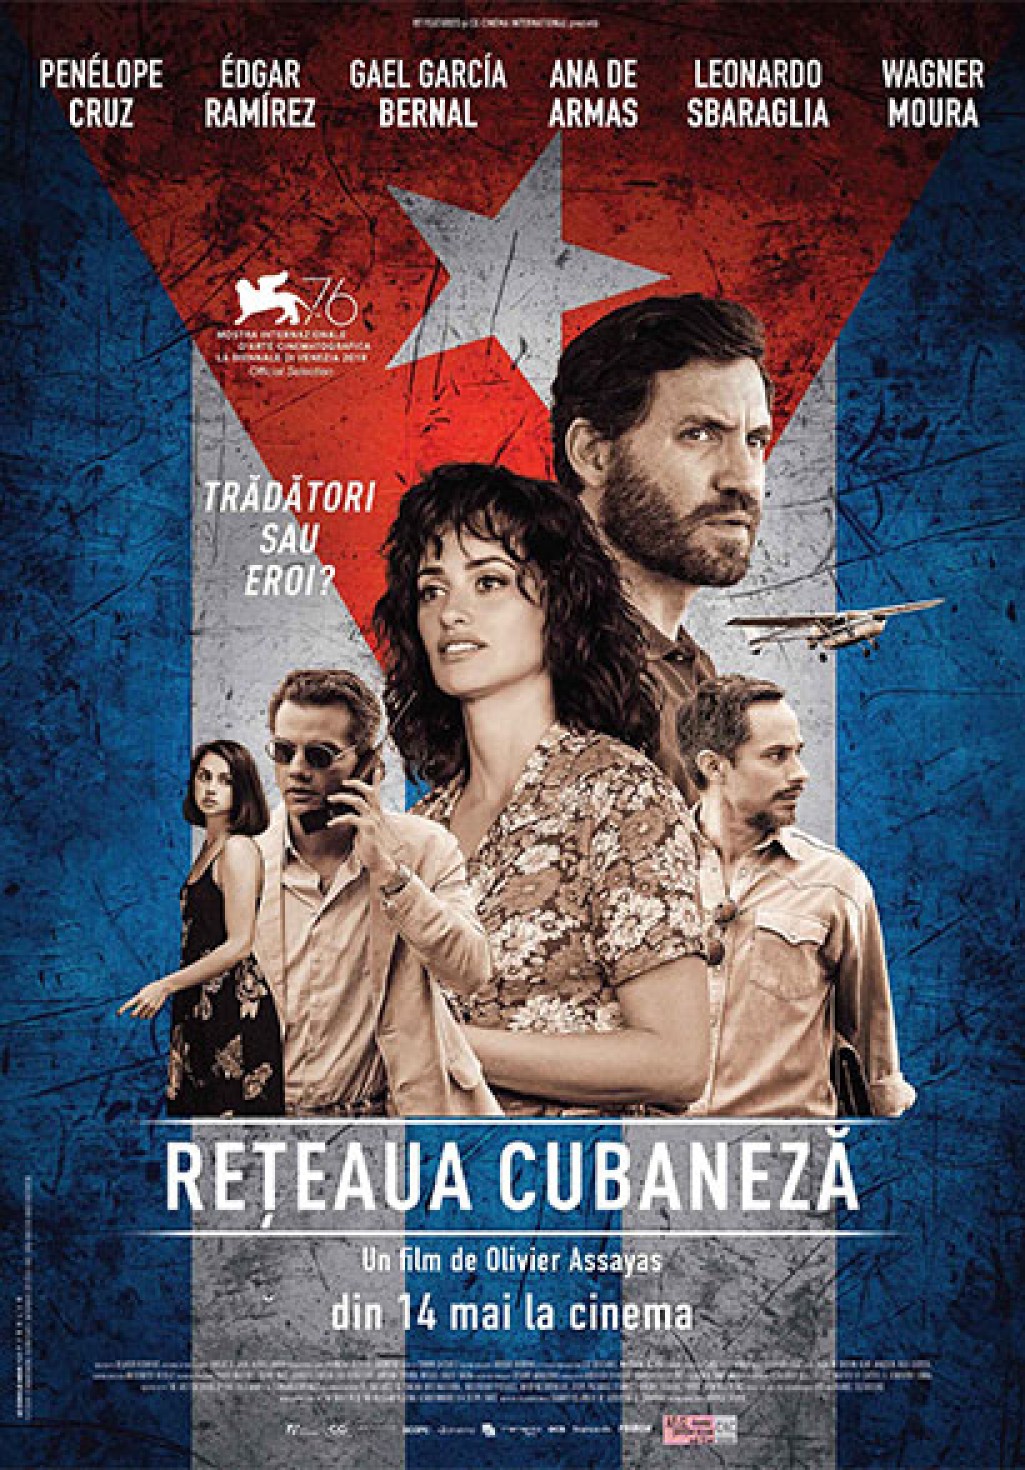 Reteaua cubaneza - WASP Network poster Romania